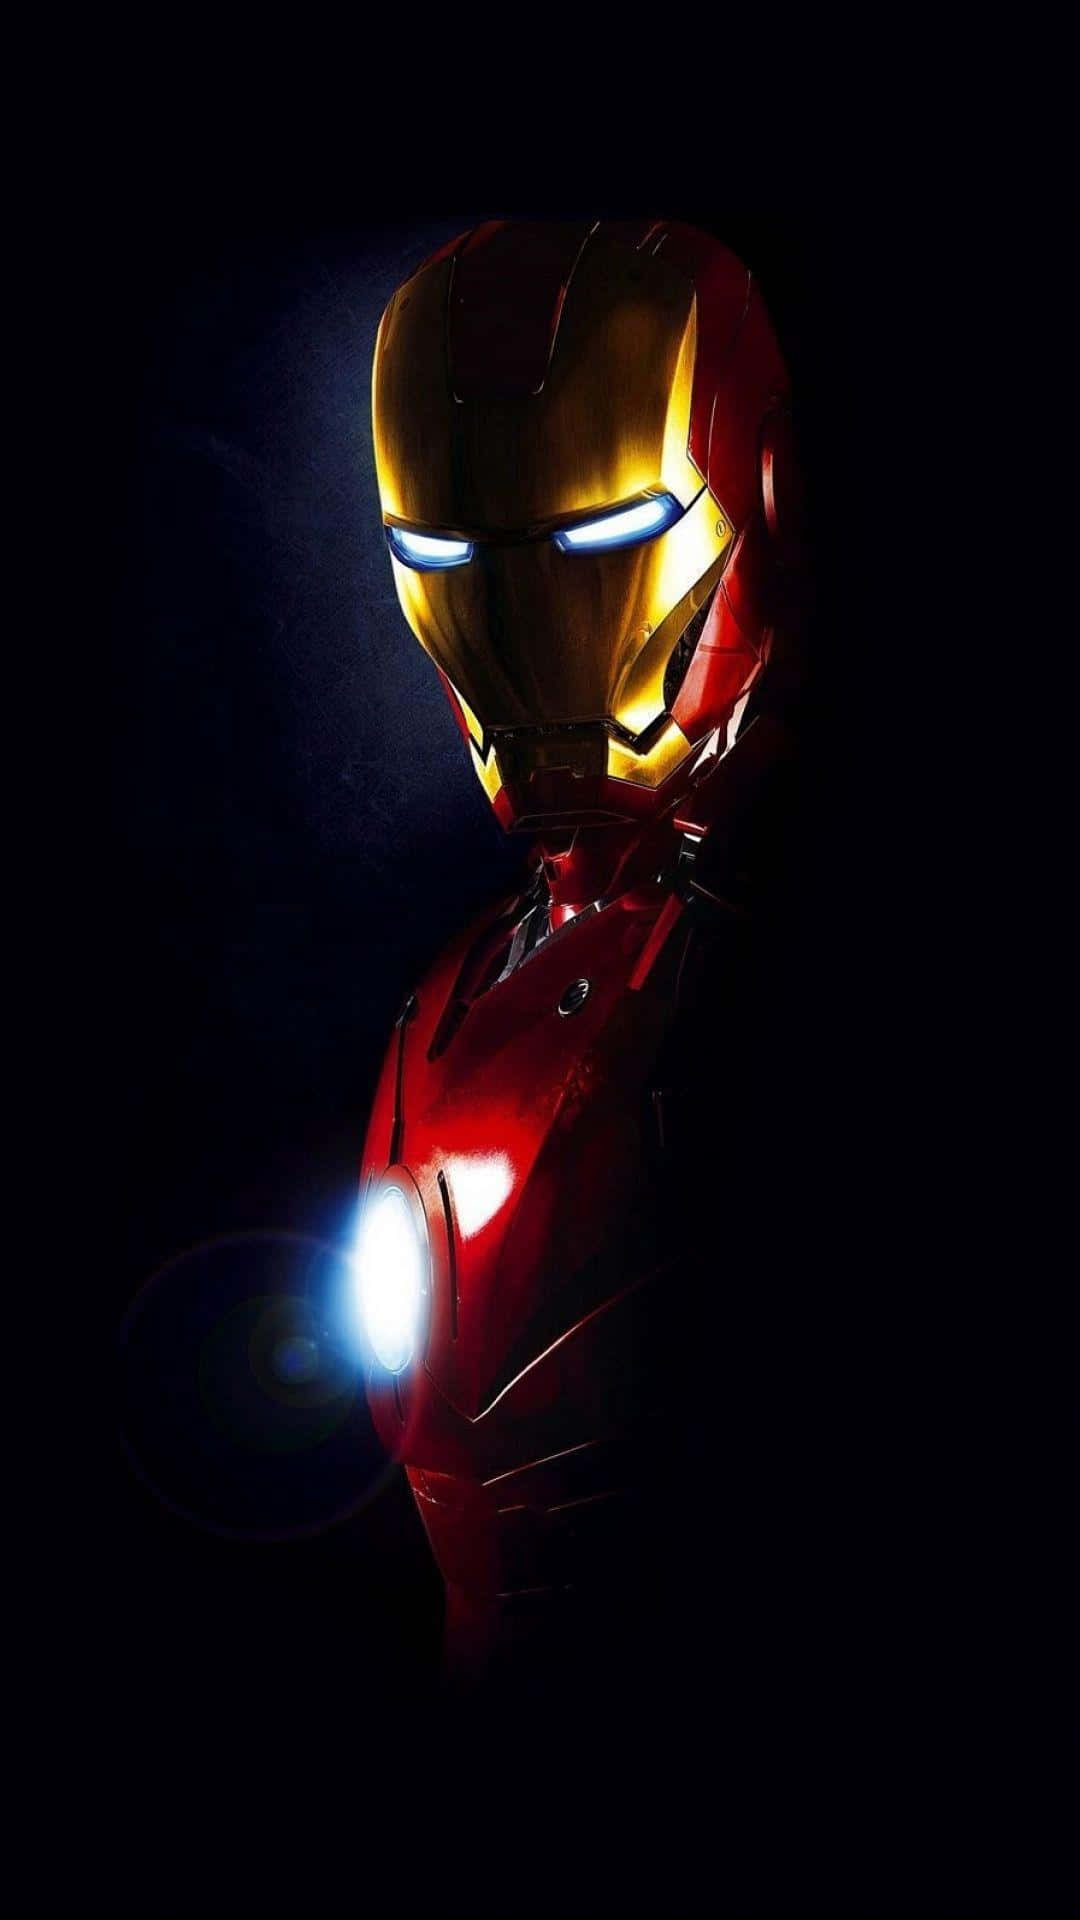 Majestic Iron Man In Battle Stance